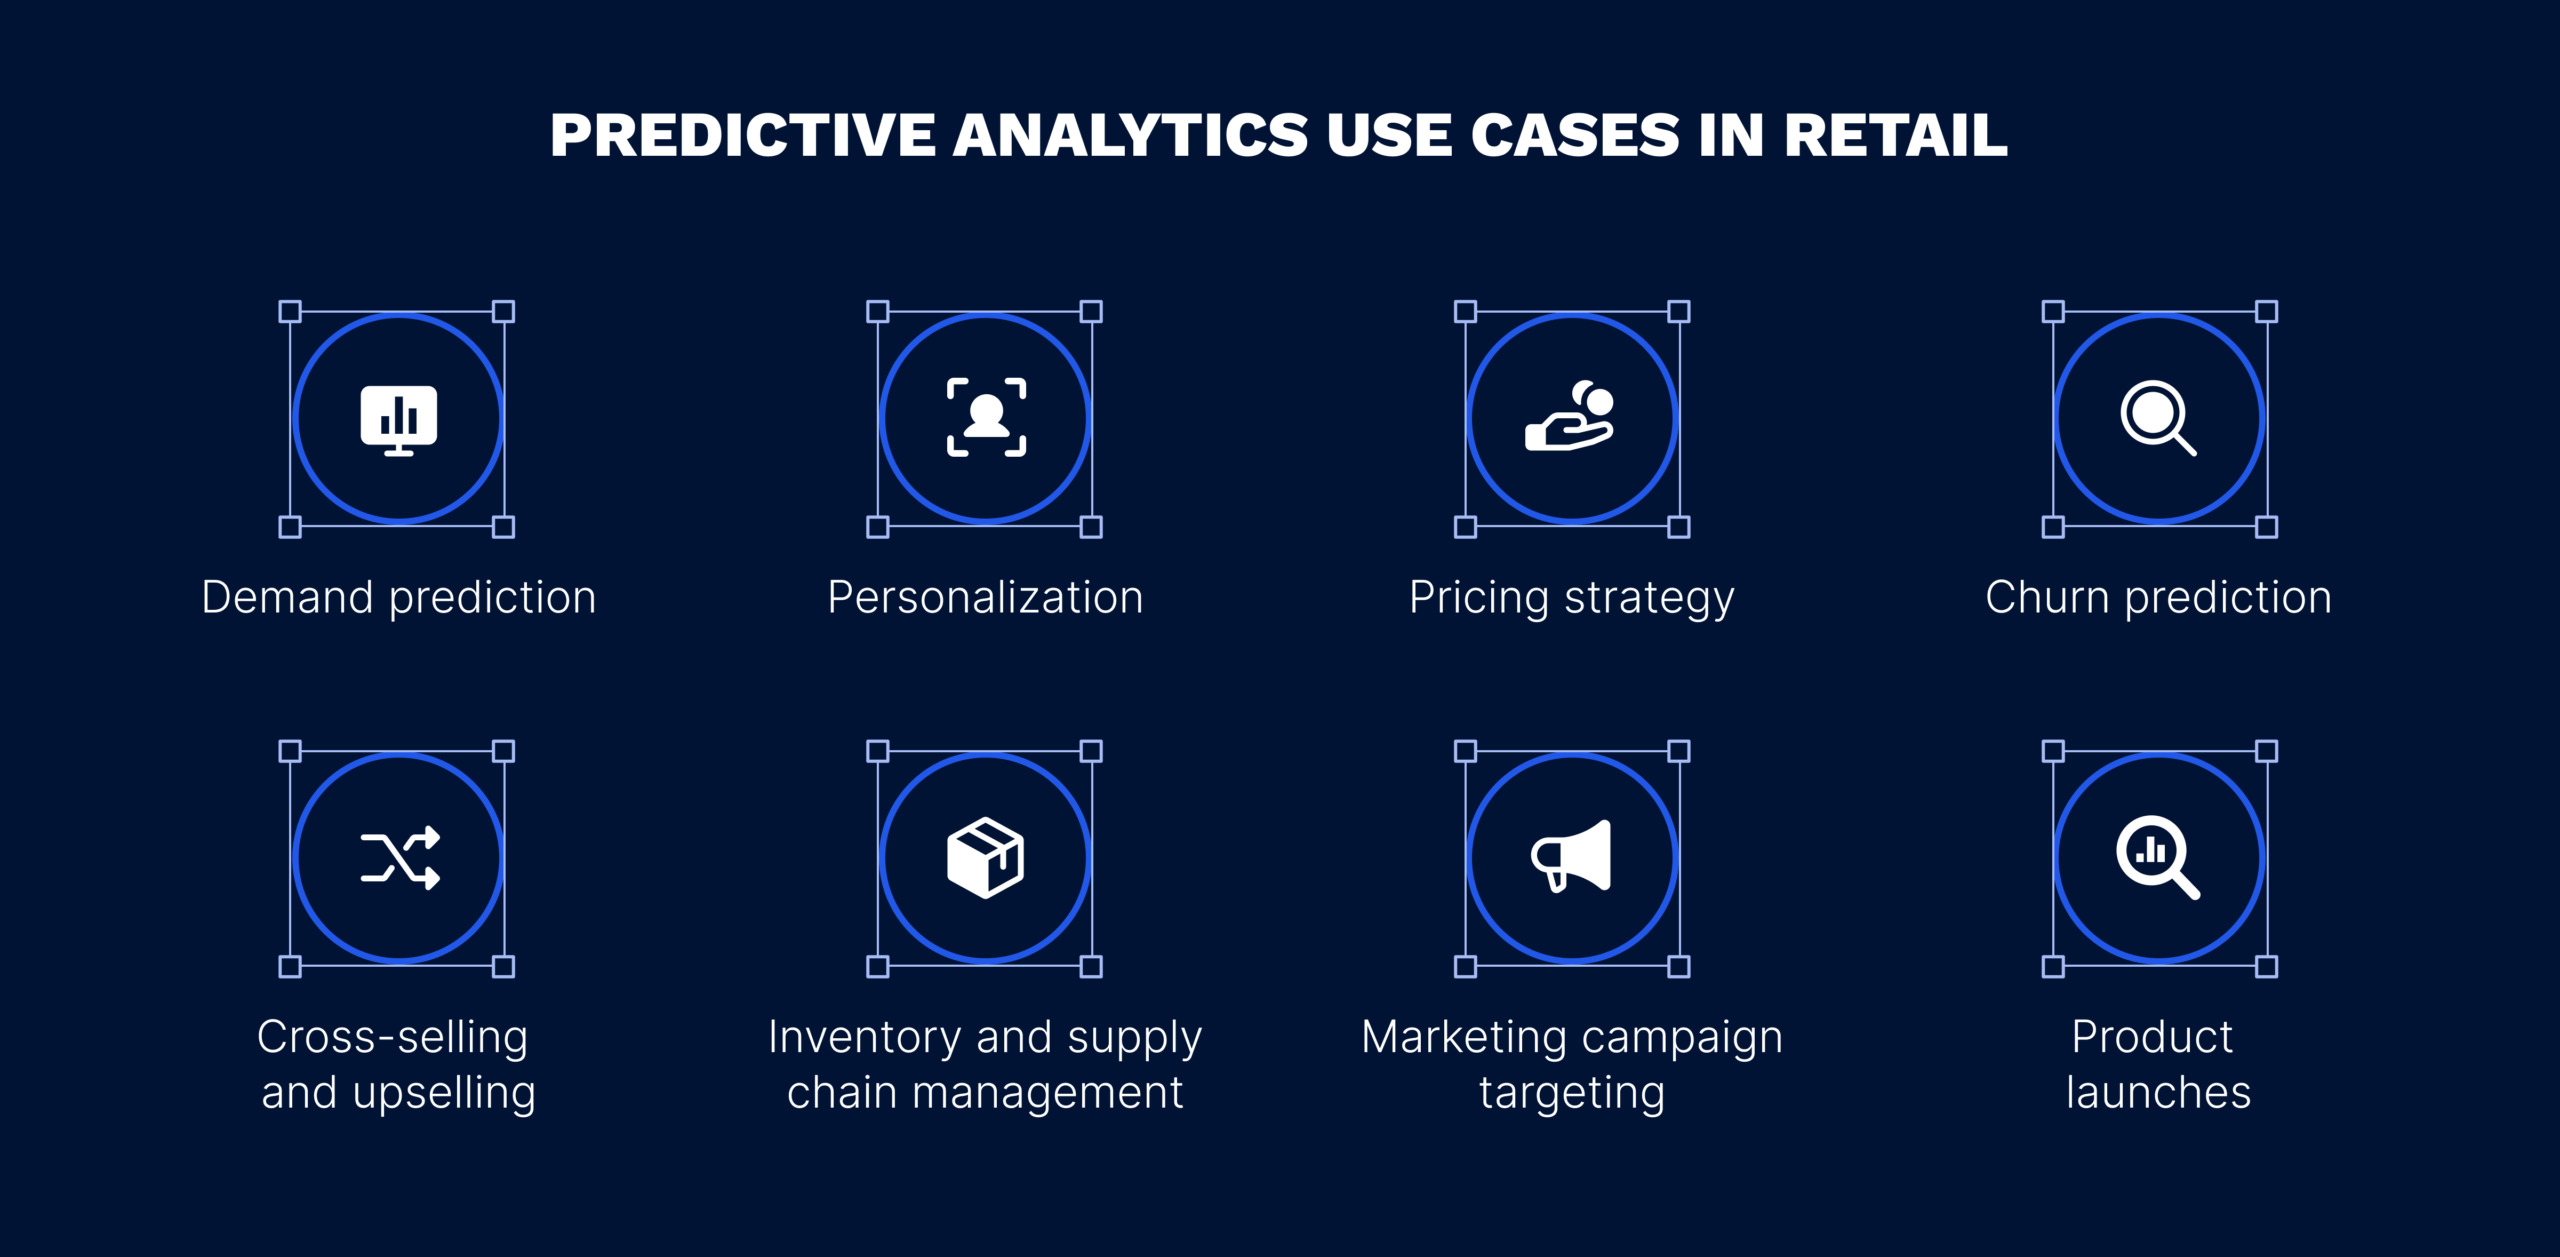 Predictive analytics use cases in retail